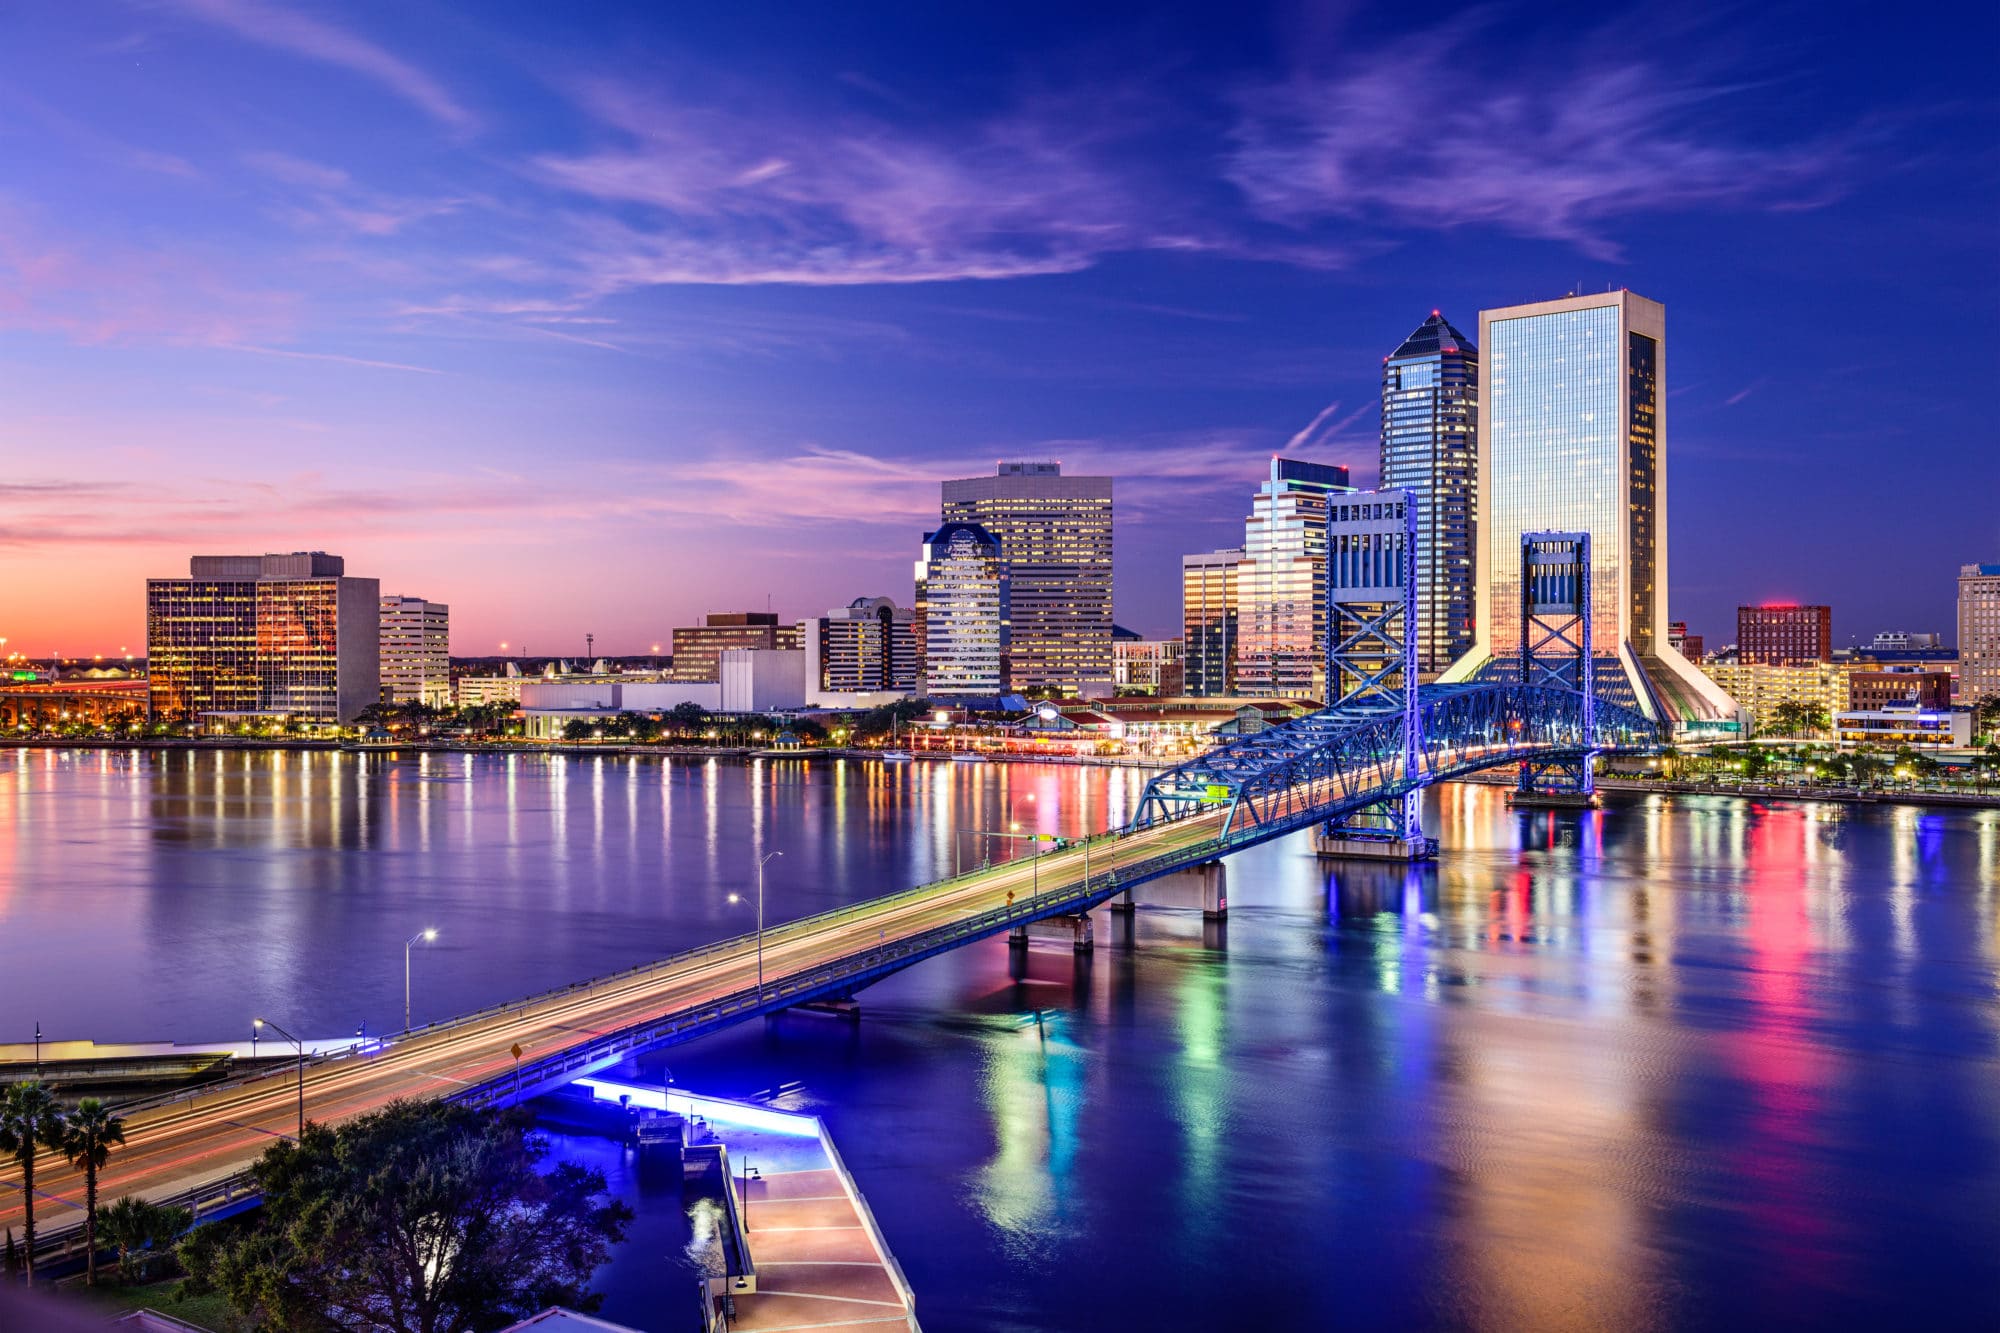 Jacksonville, FL - APM Inn & Suites - Hotel Rooms Jacksonville, FL